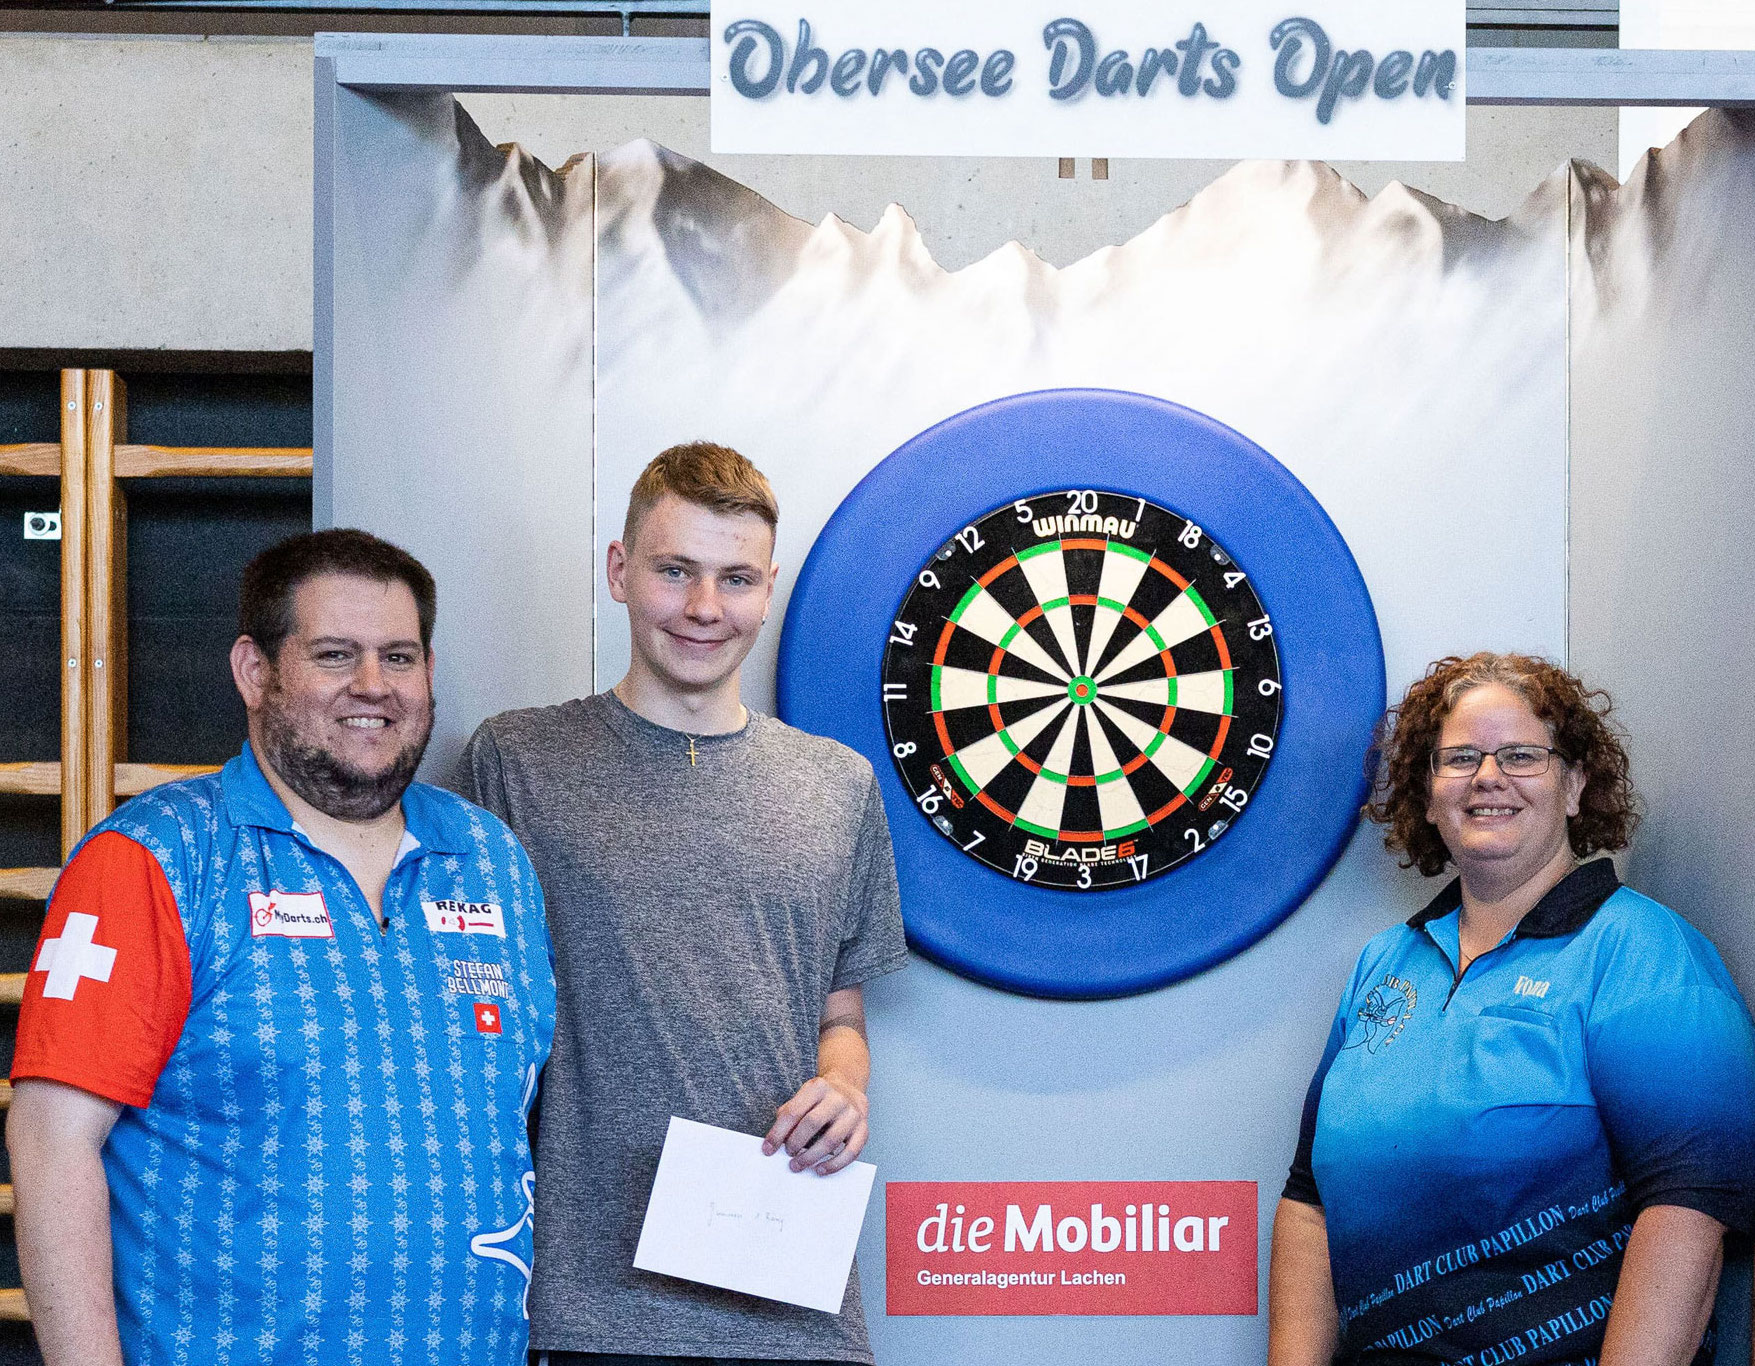 Obersee Darts Open 2022